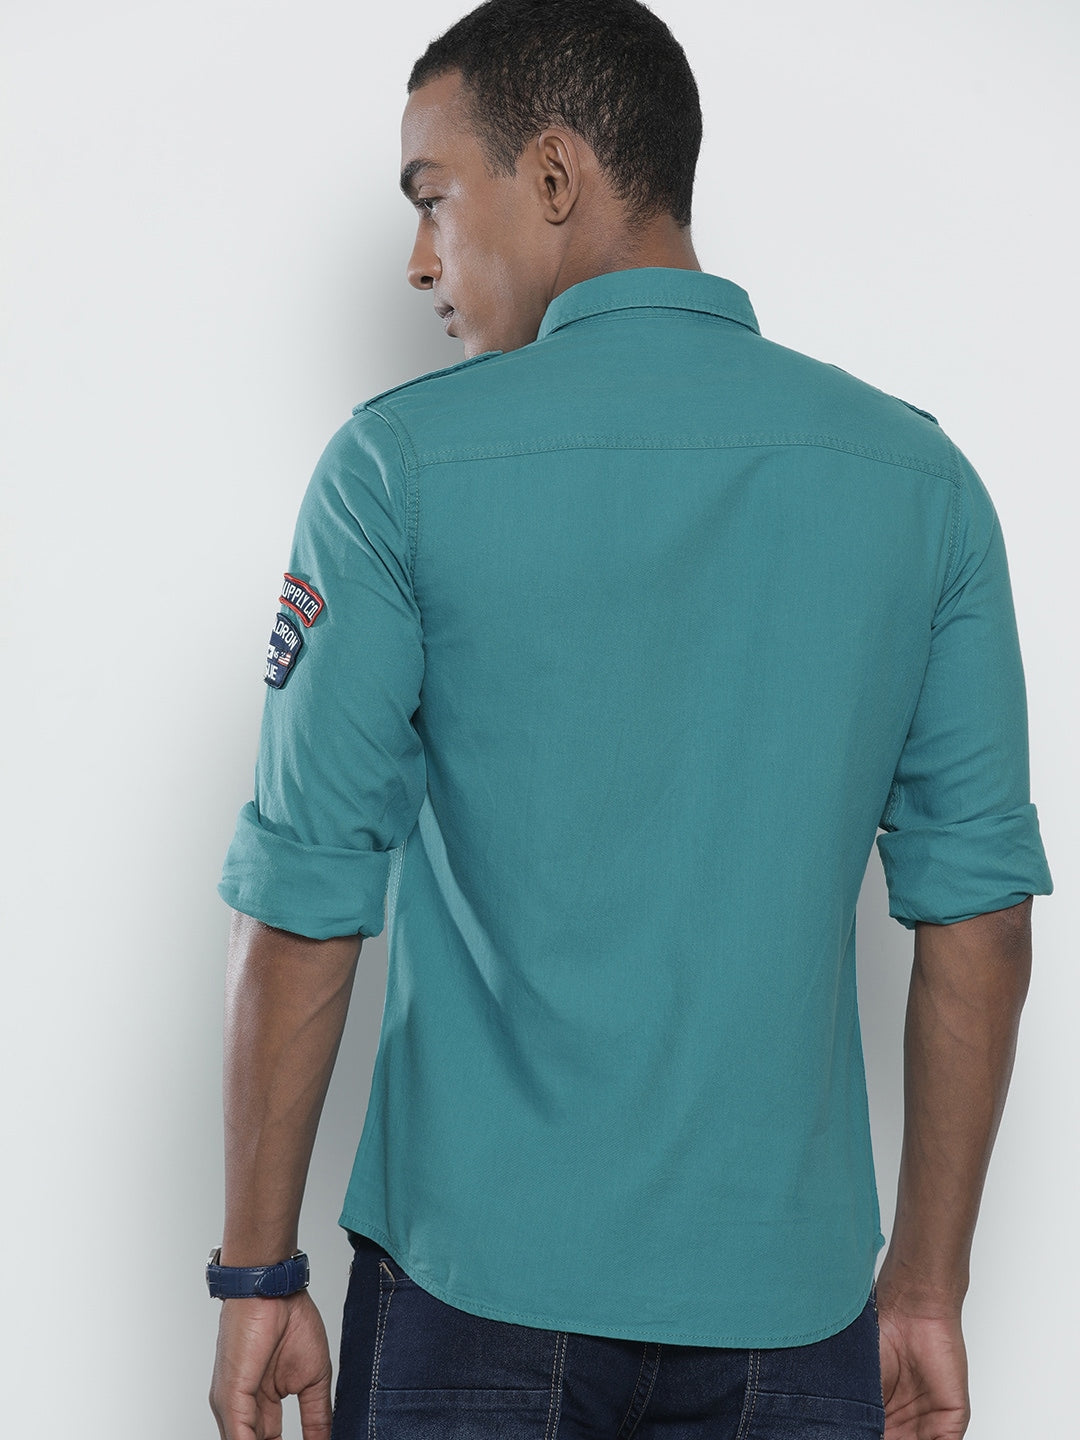 Shop The Indian Garage Co Men Sea Green Regular Opaque Solid Casual Shirt Online.